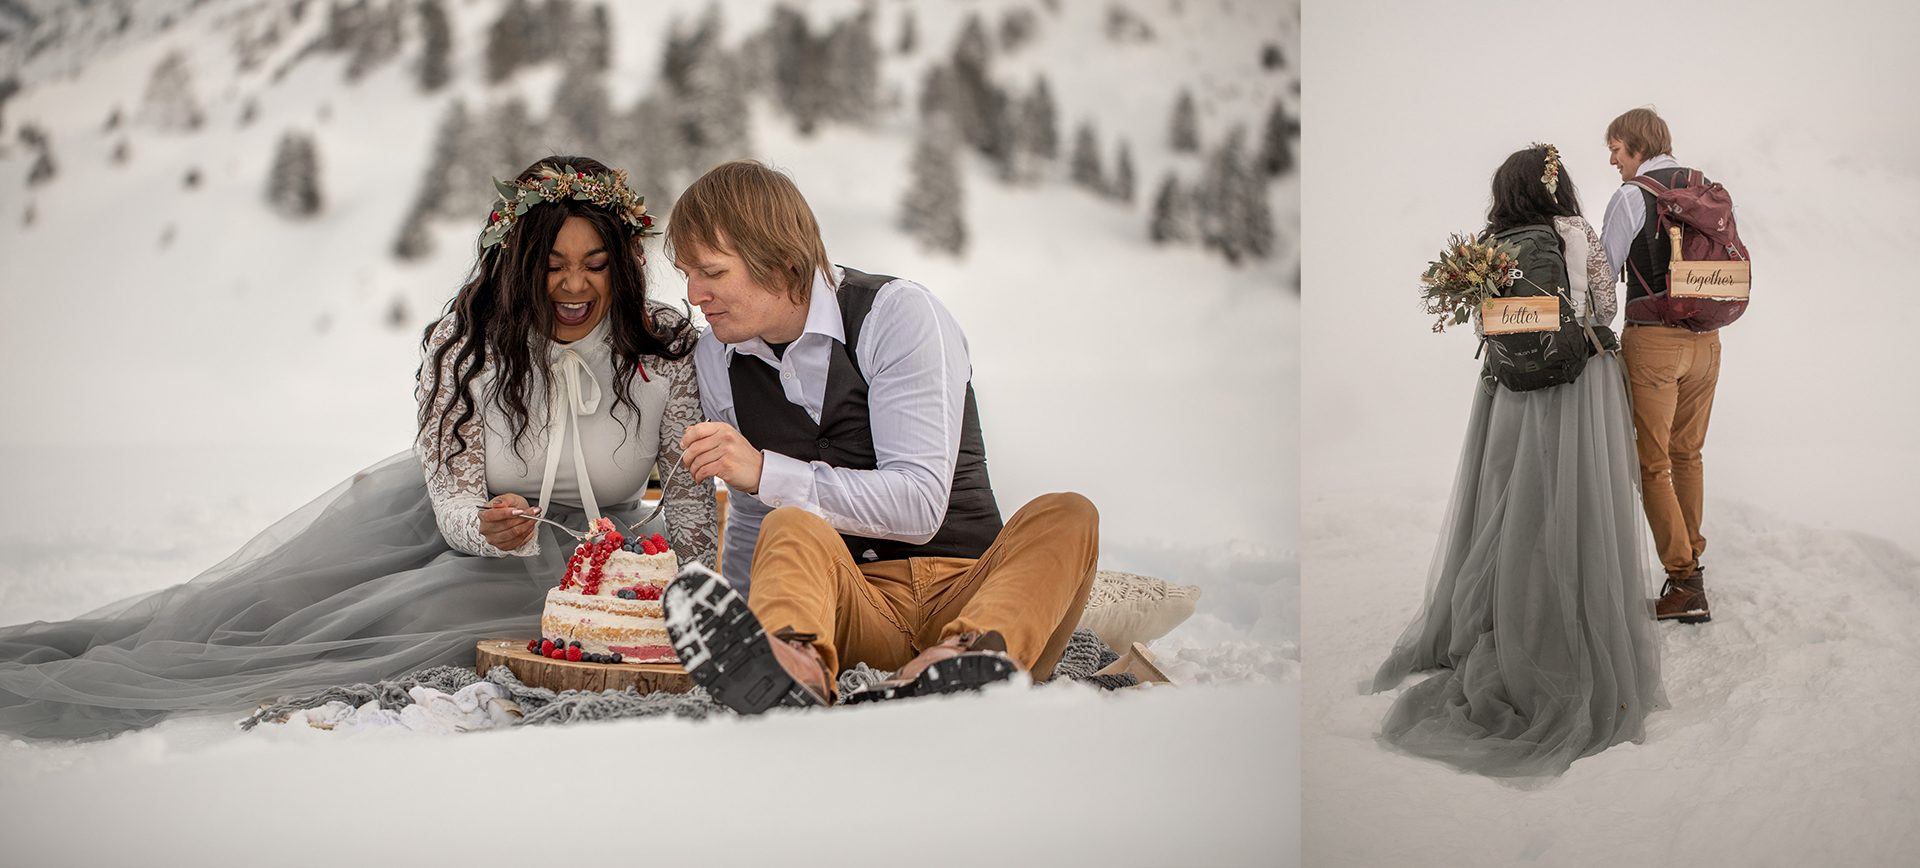 Austria winter elopement package 1